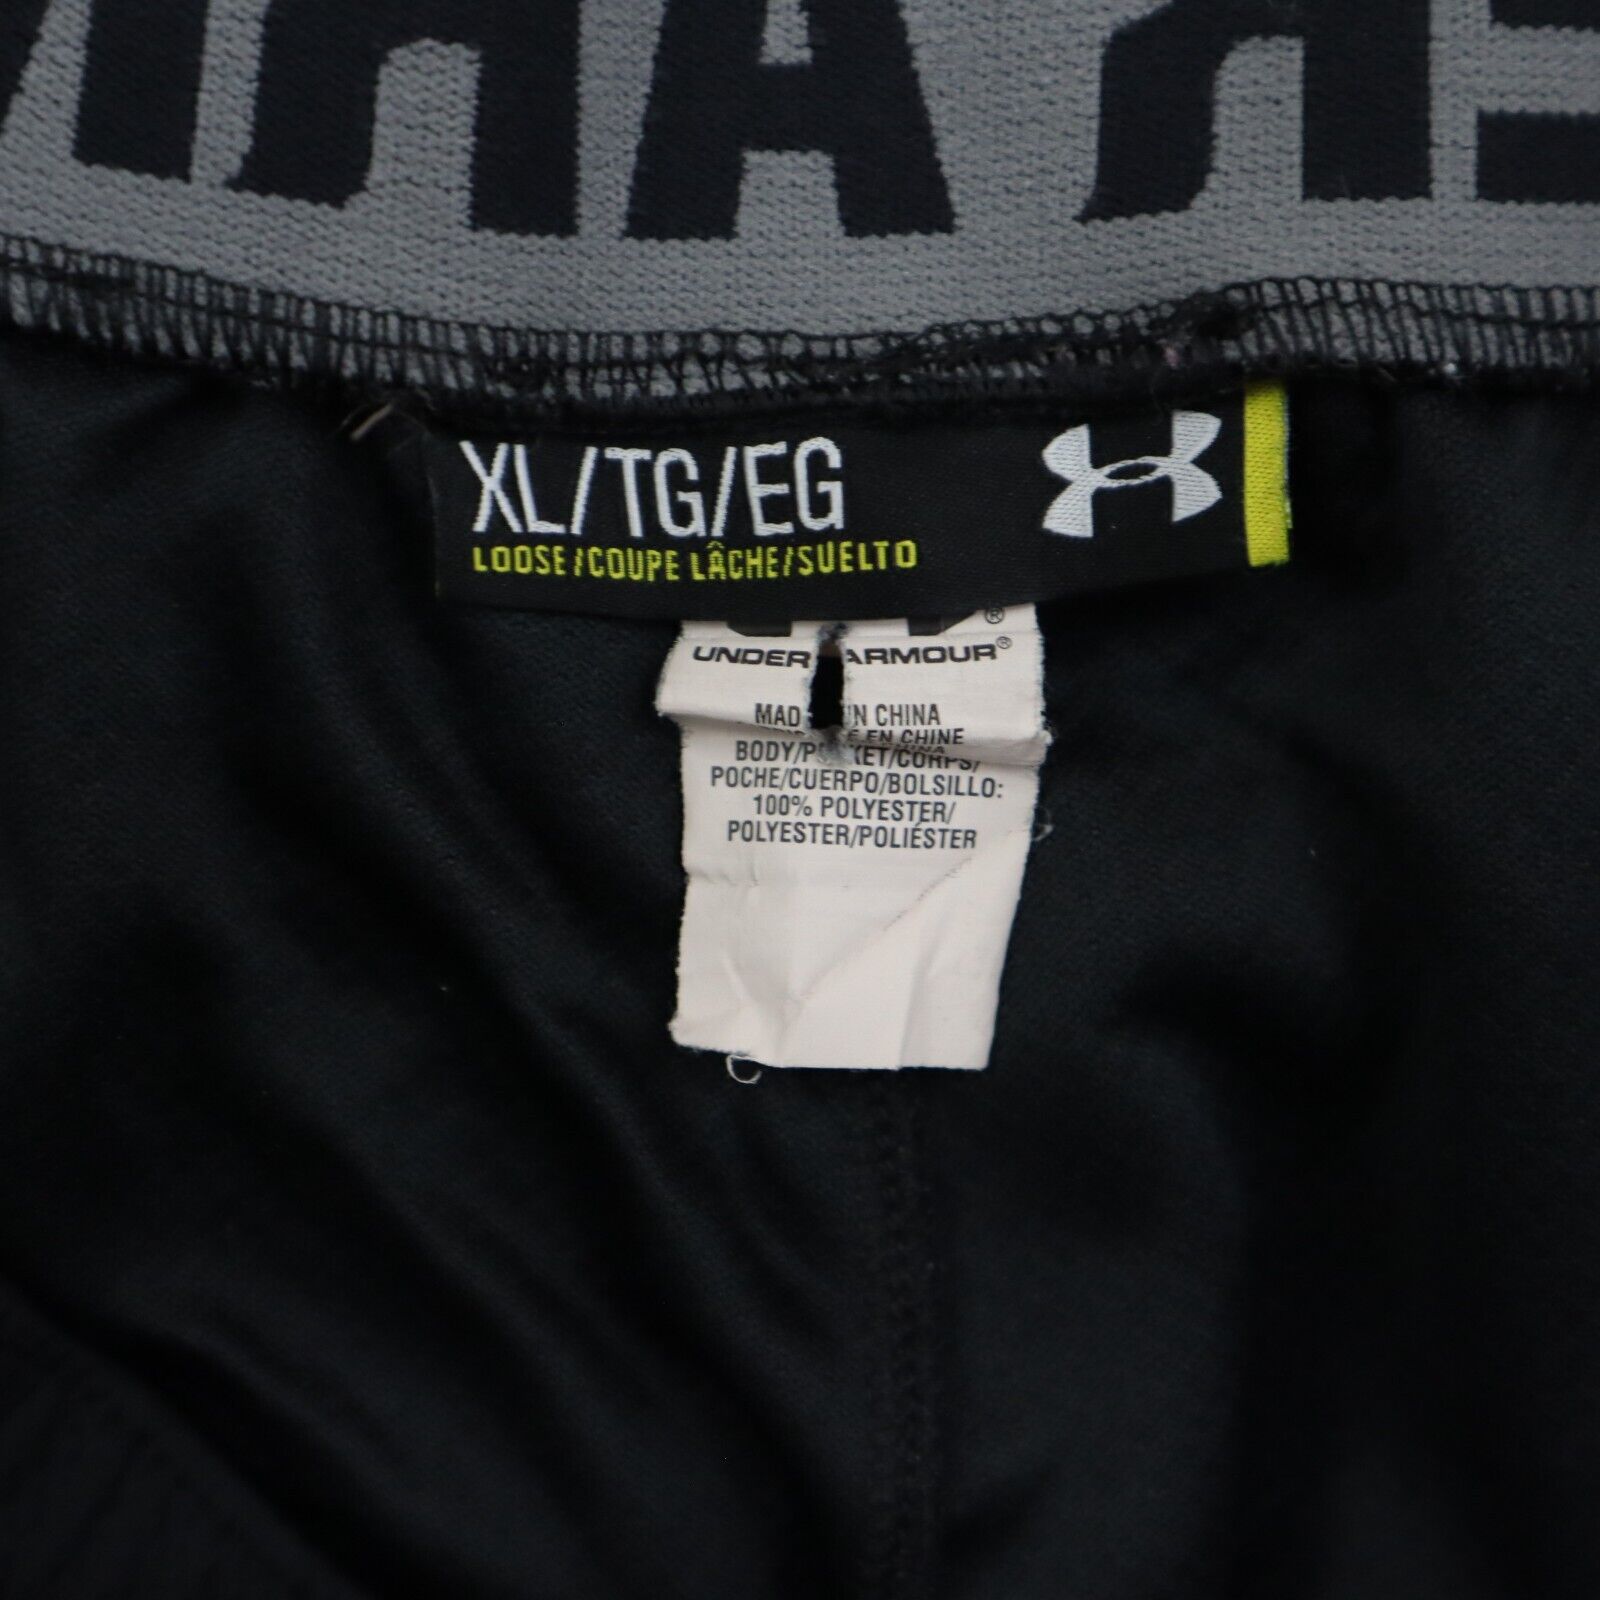 Under armour mens xl pants - Athletic apparel